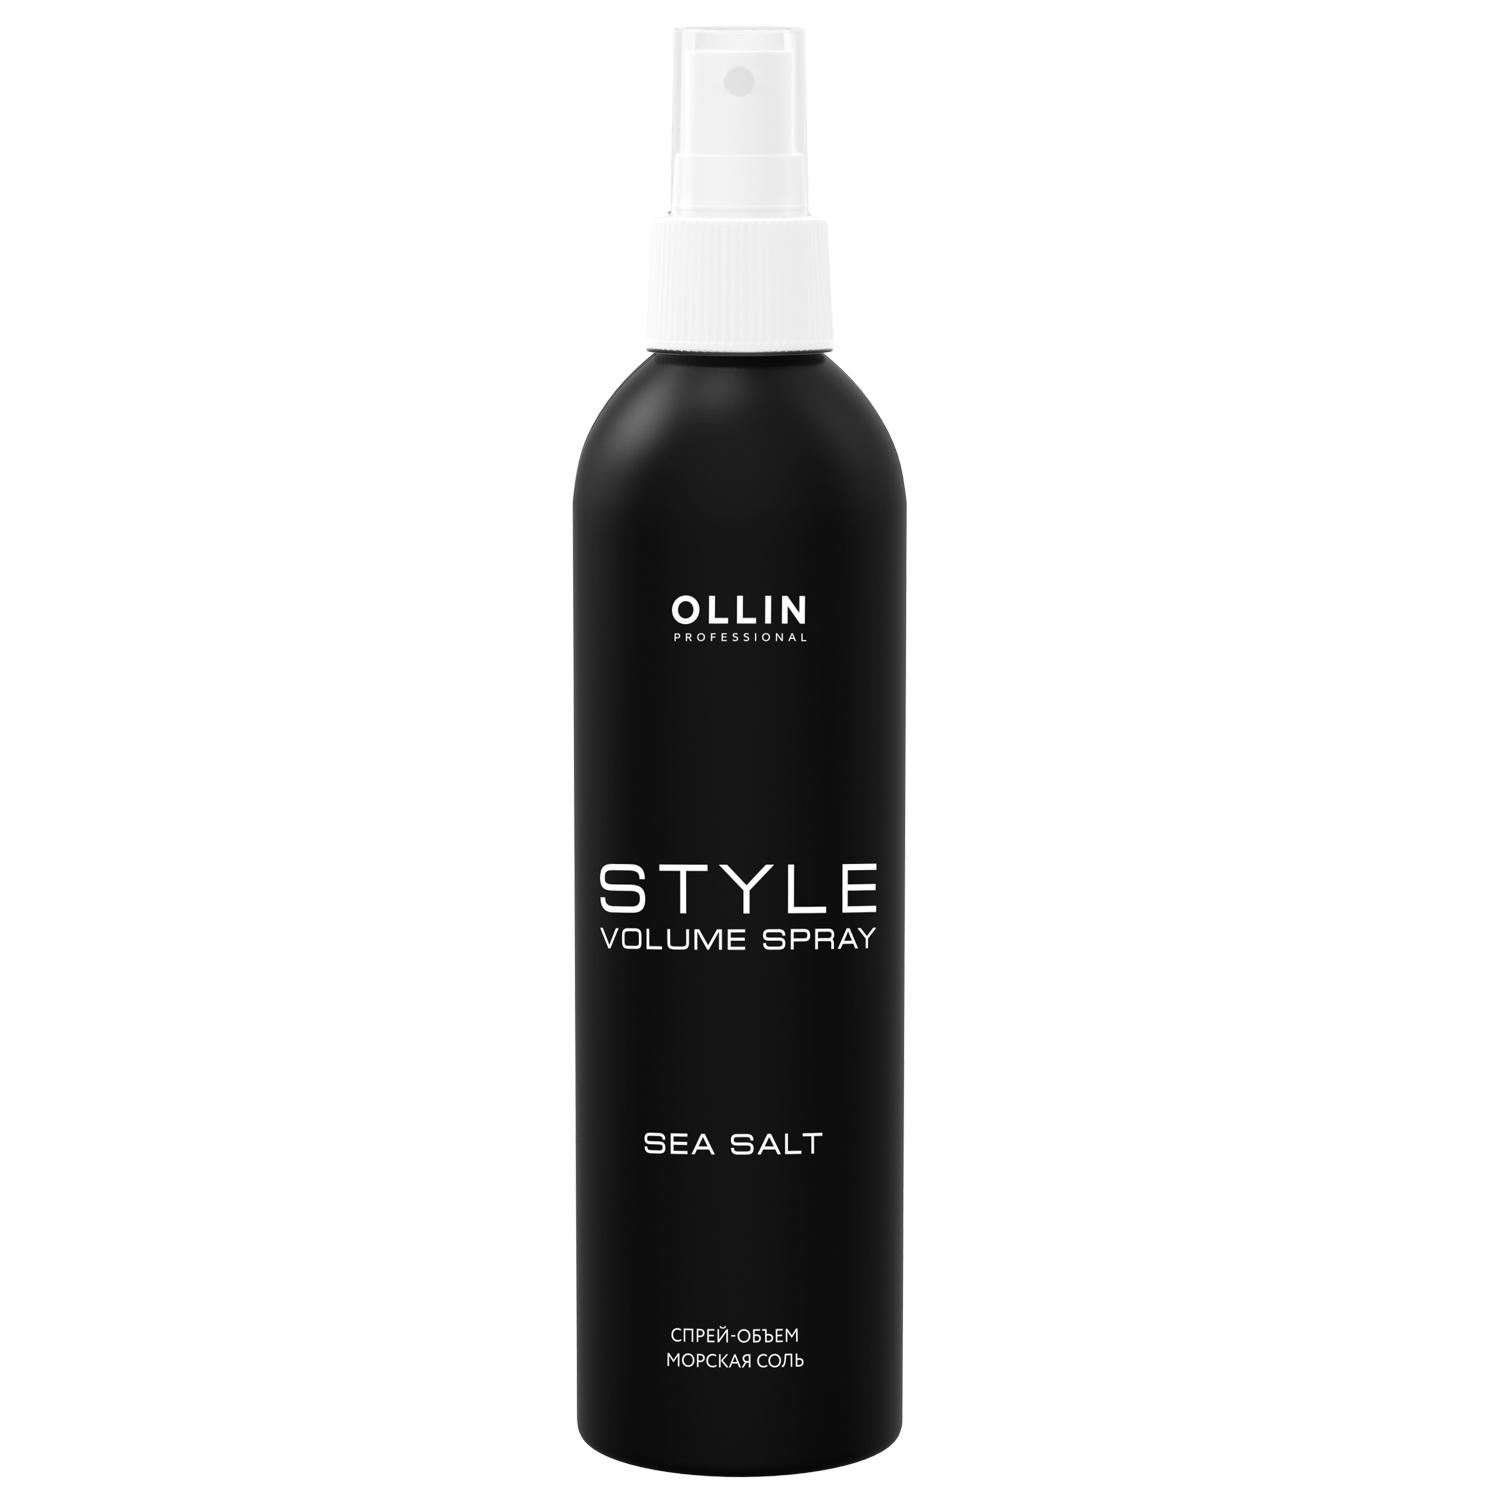 Ollin Professional Спрей-объем Морская соль, 250 мл (Ollin Professional, Style) спрей для волос ollin professional style для объема морская соль 250 мл